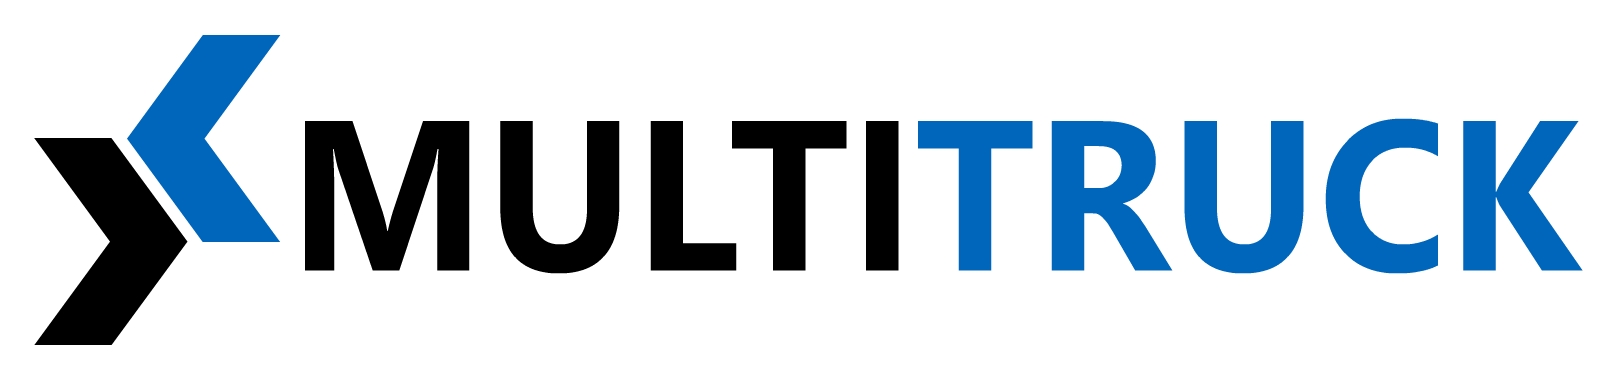 multitruck logo